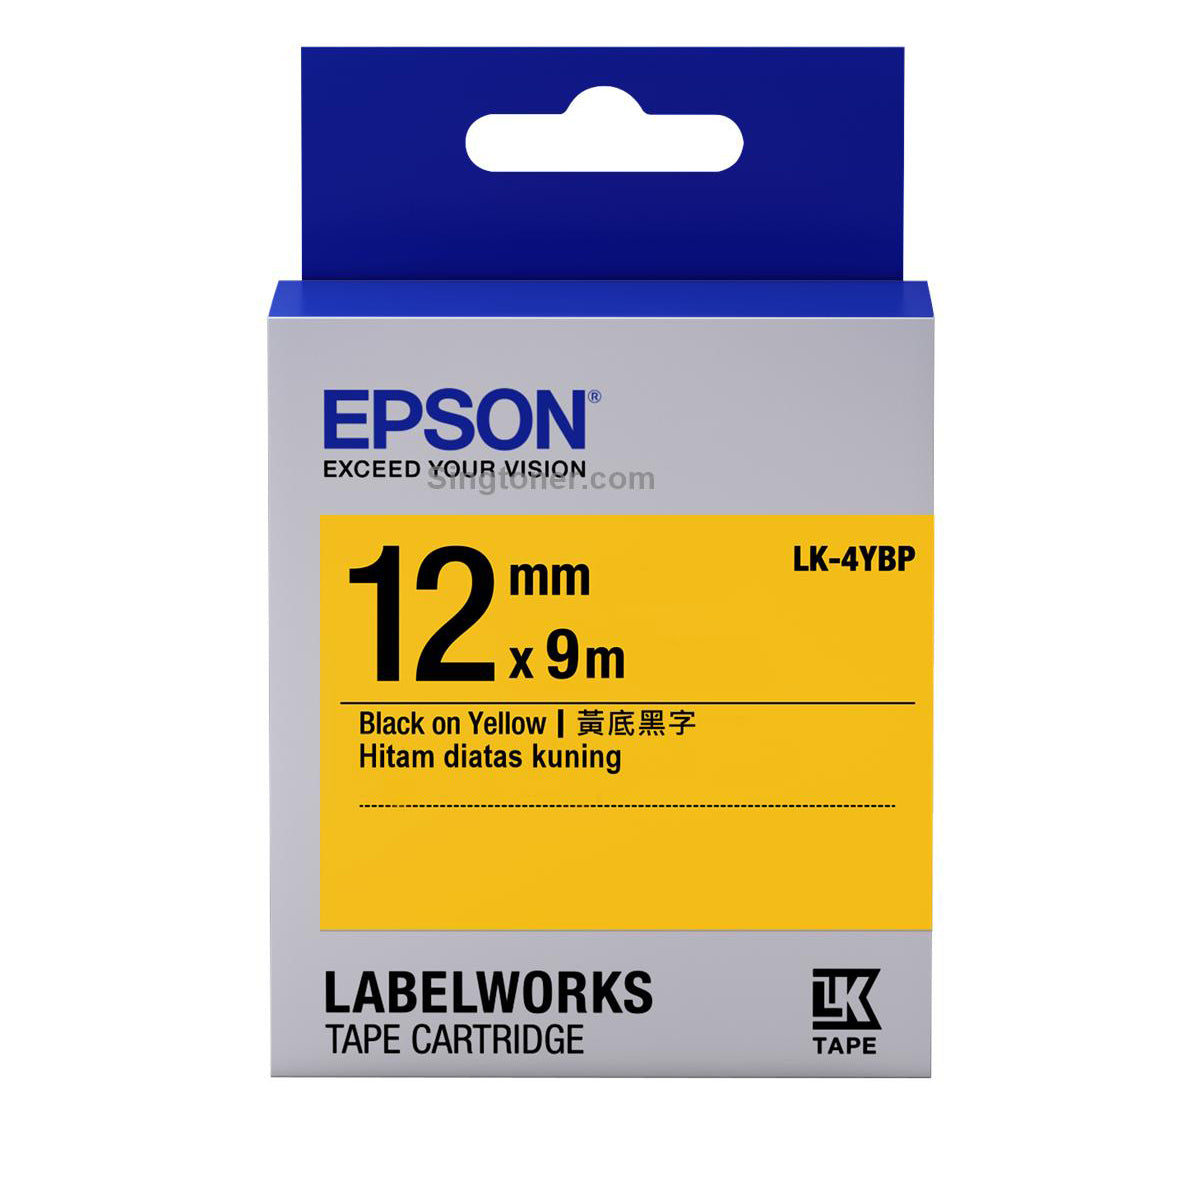 EPSON LK Tape Pastel 12mmx9m Black On Yellow